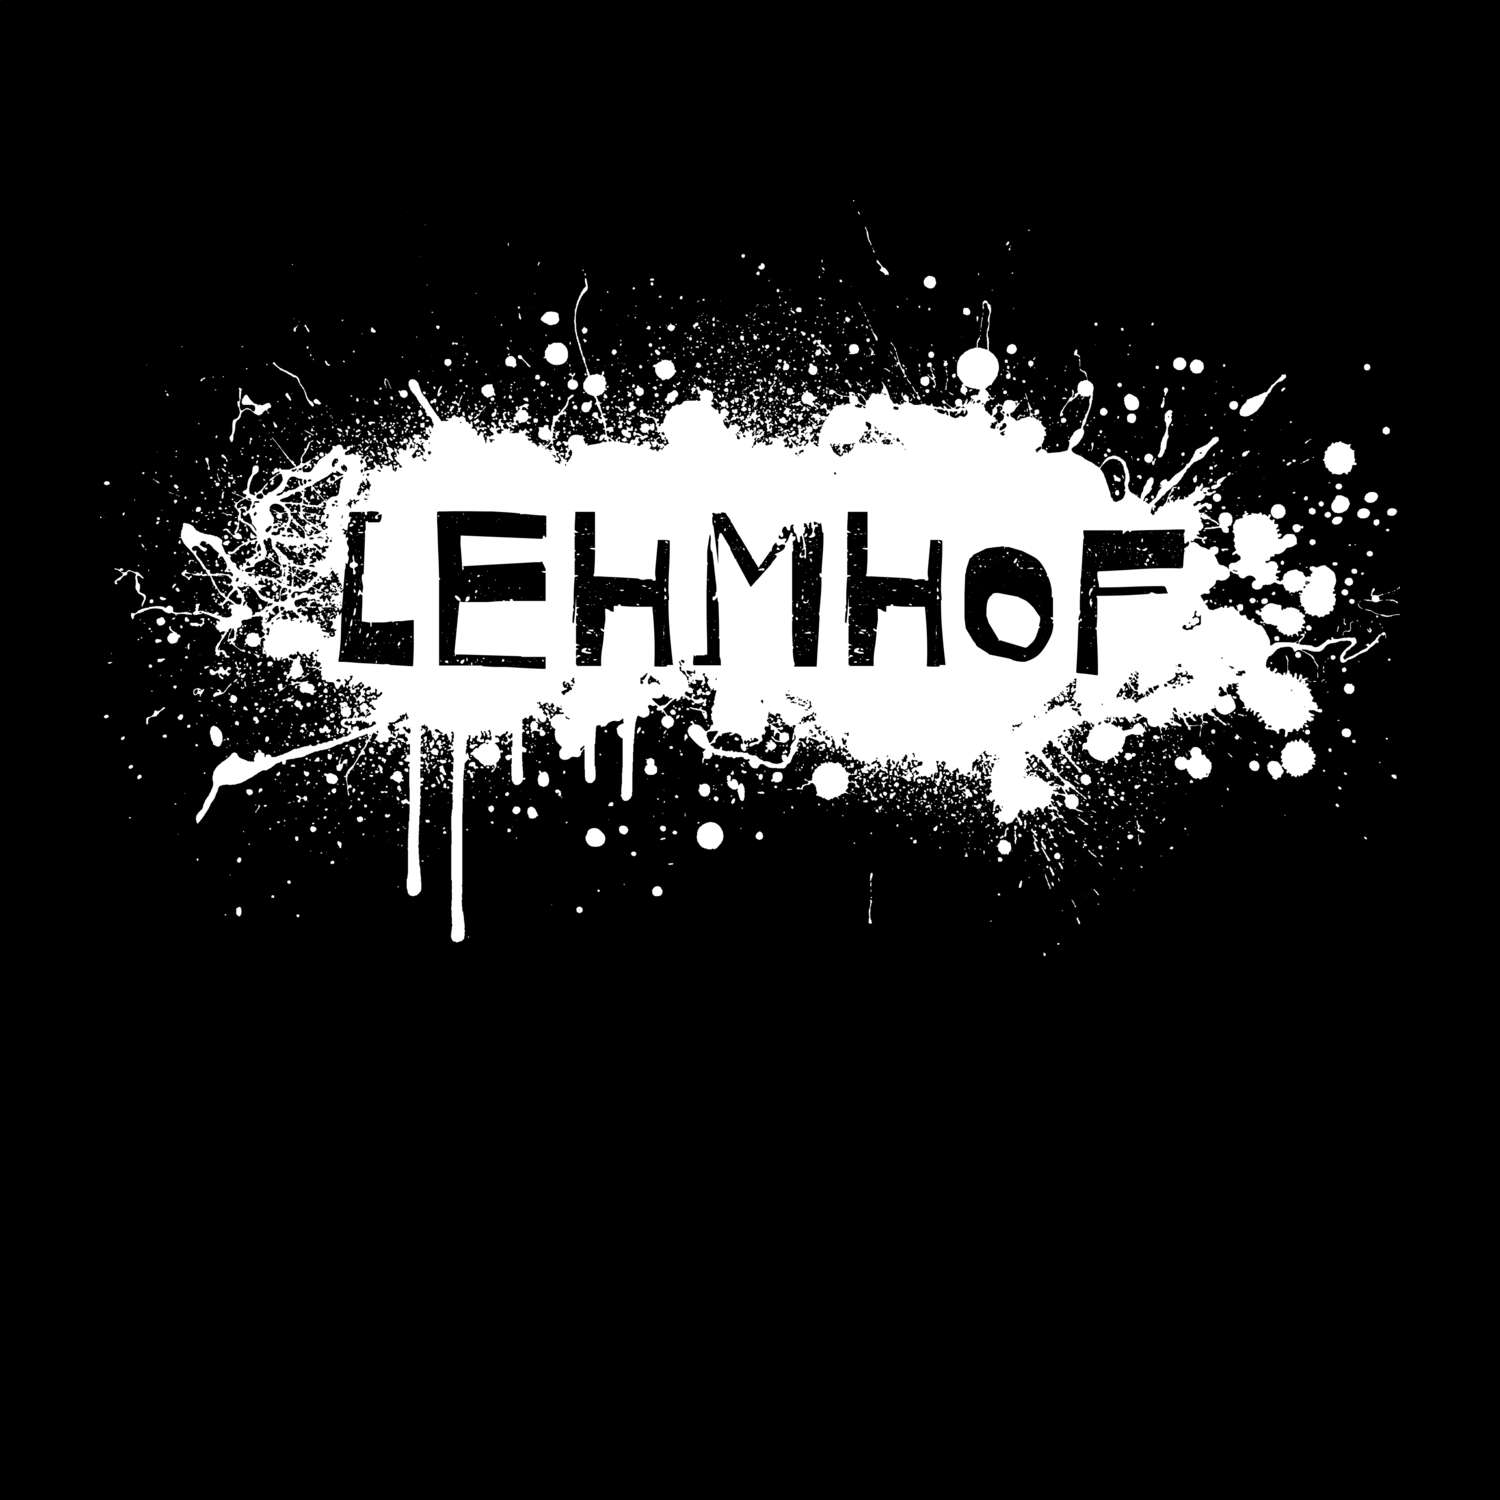 Lehmhof T-Shirt »Paint Splash Punk«